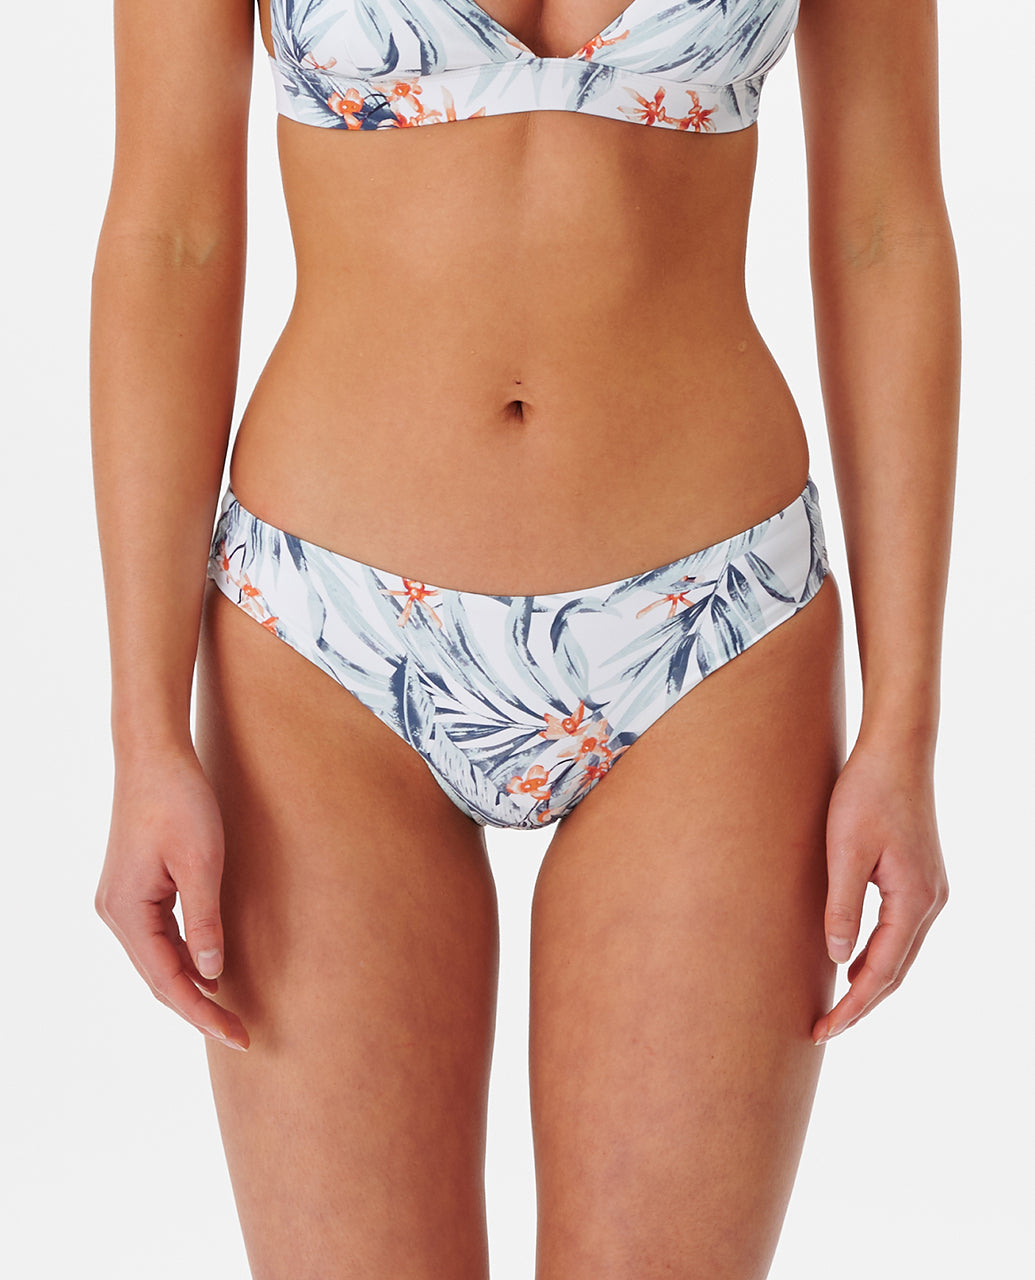 [SALE] Women's DIAMOND BAY GOOD Bikini Bottom